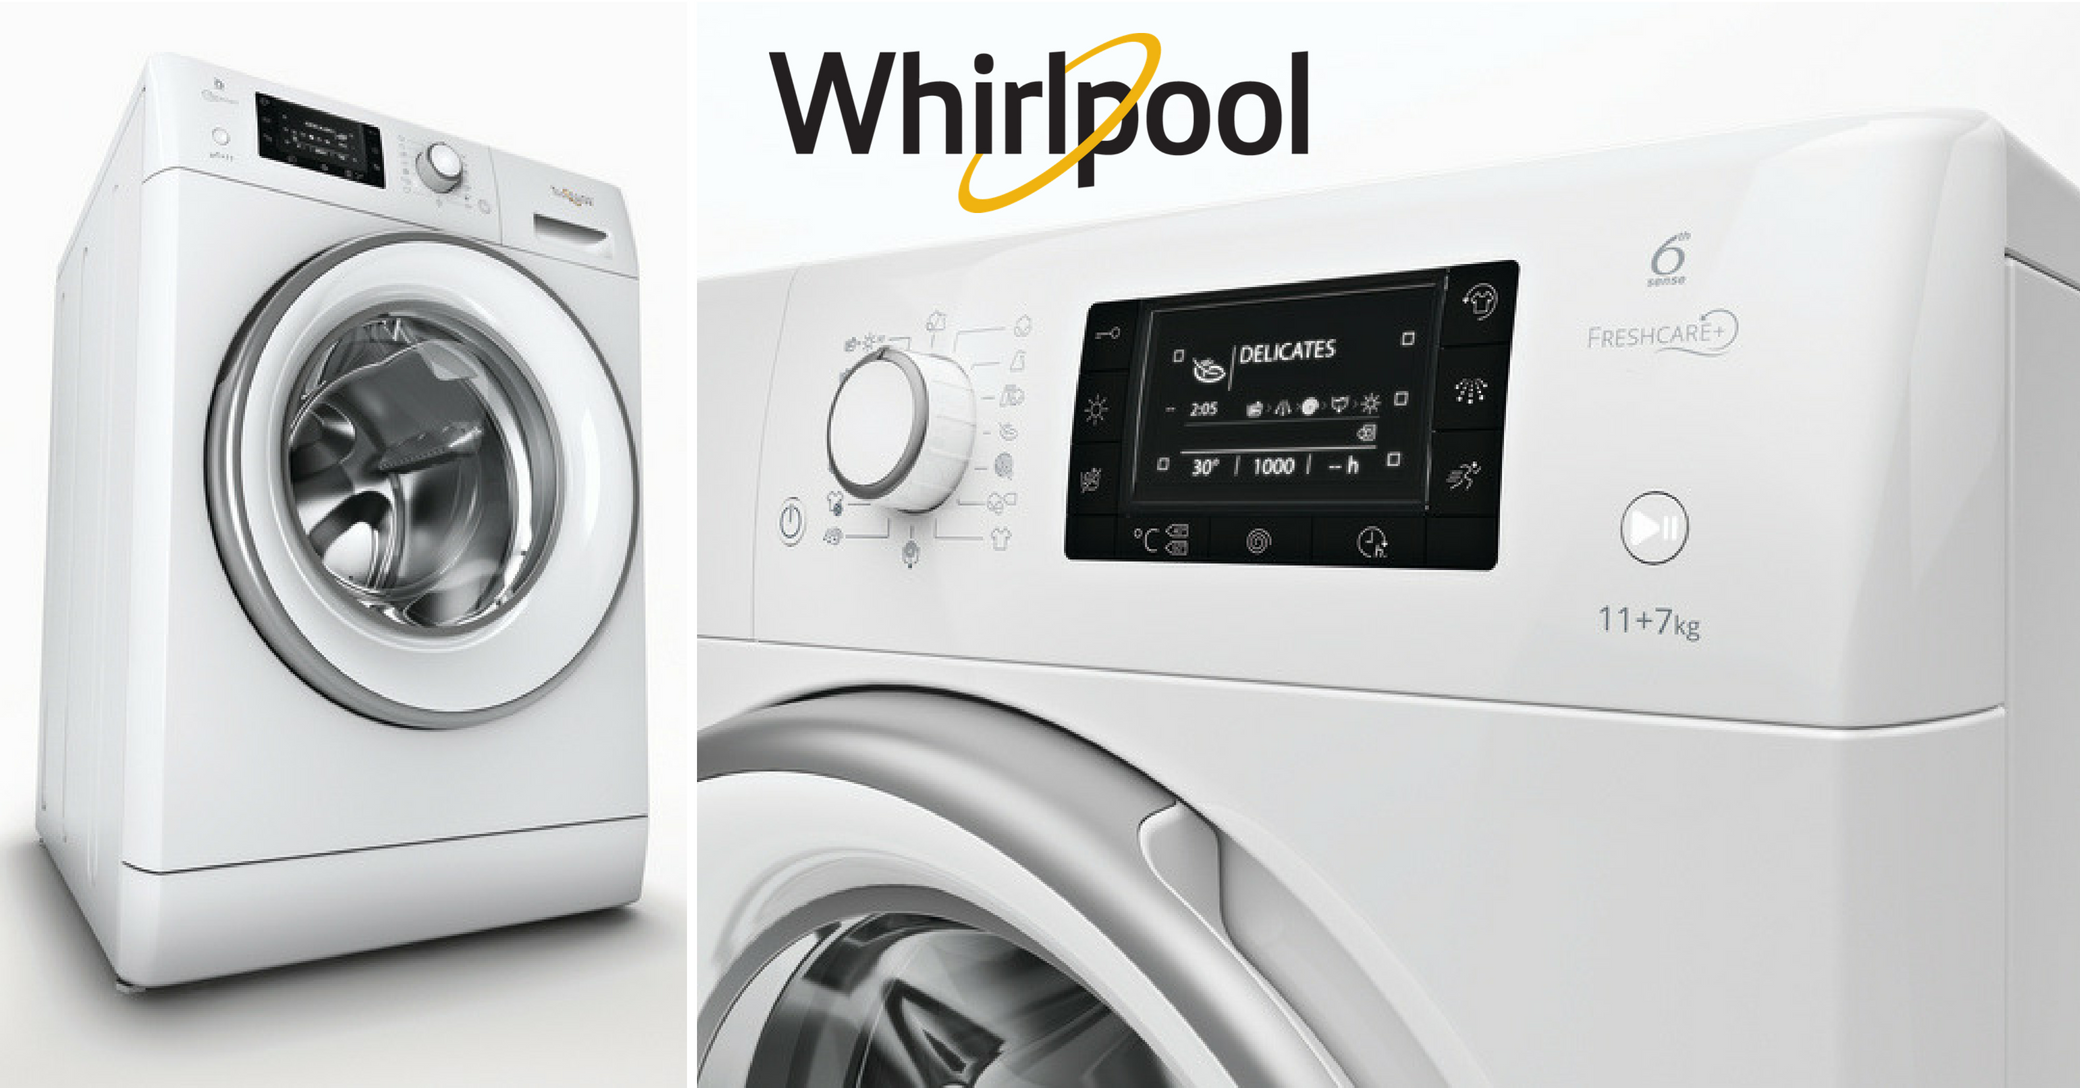 Whirlpool Fresh Care+ washer dryer